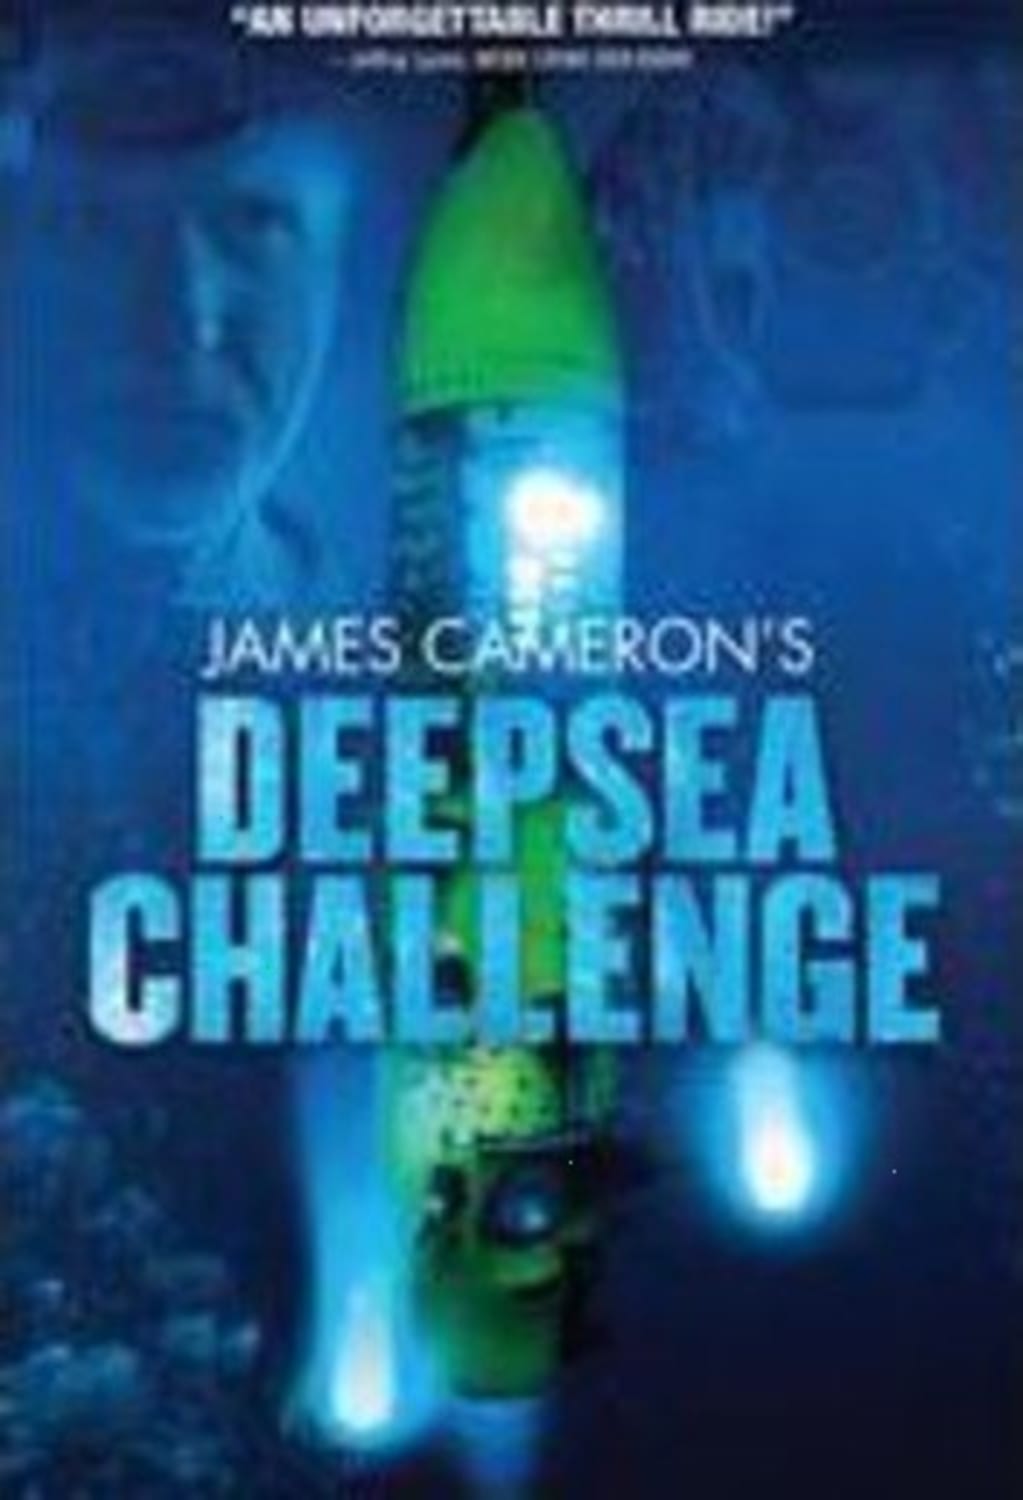 James Cameron’s Deepsea Challenge (DVD) on MovieShack